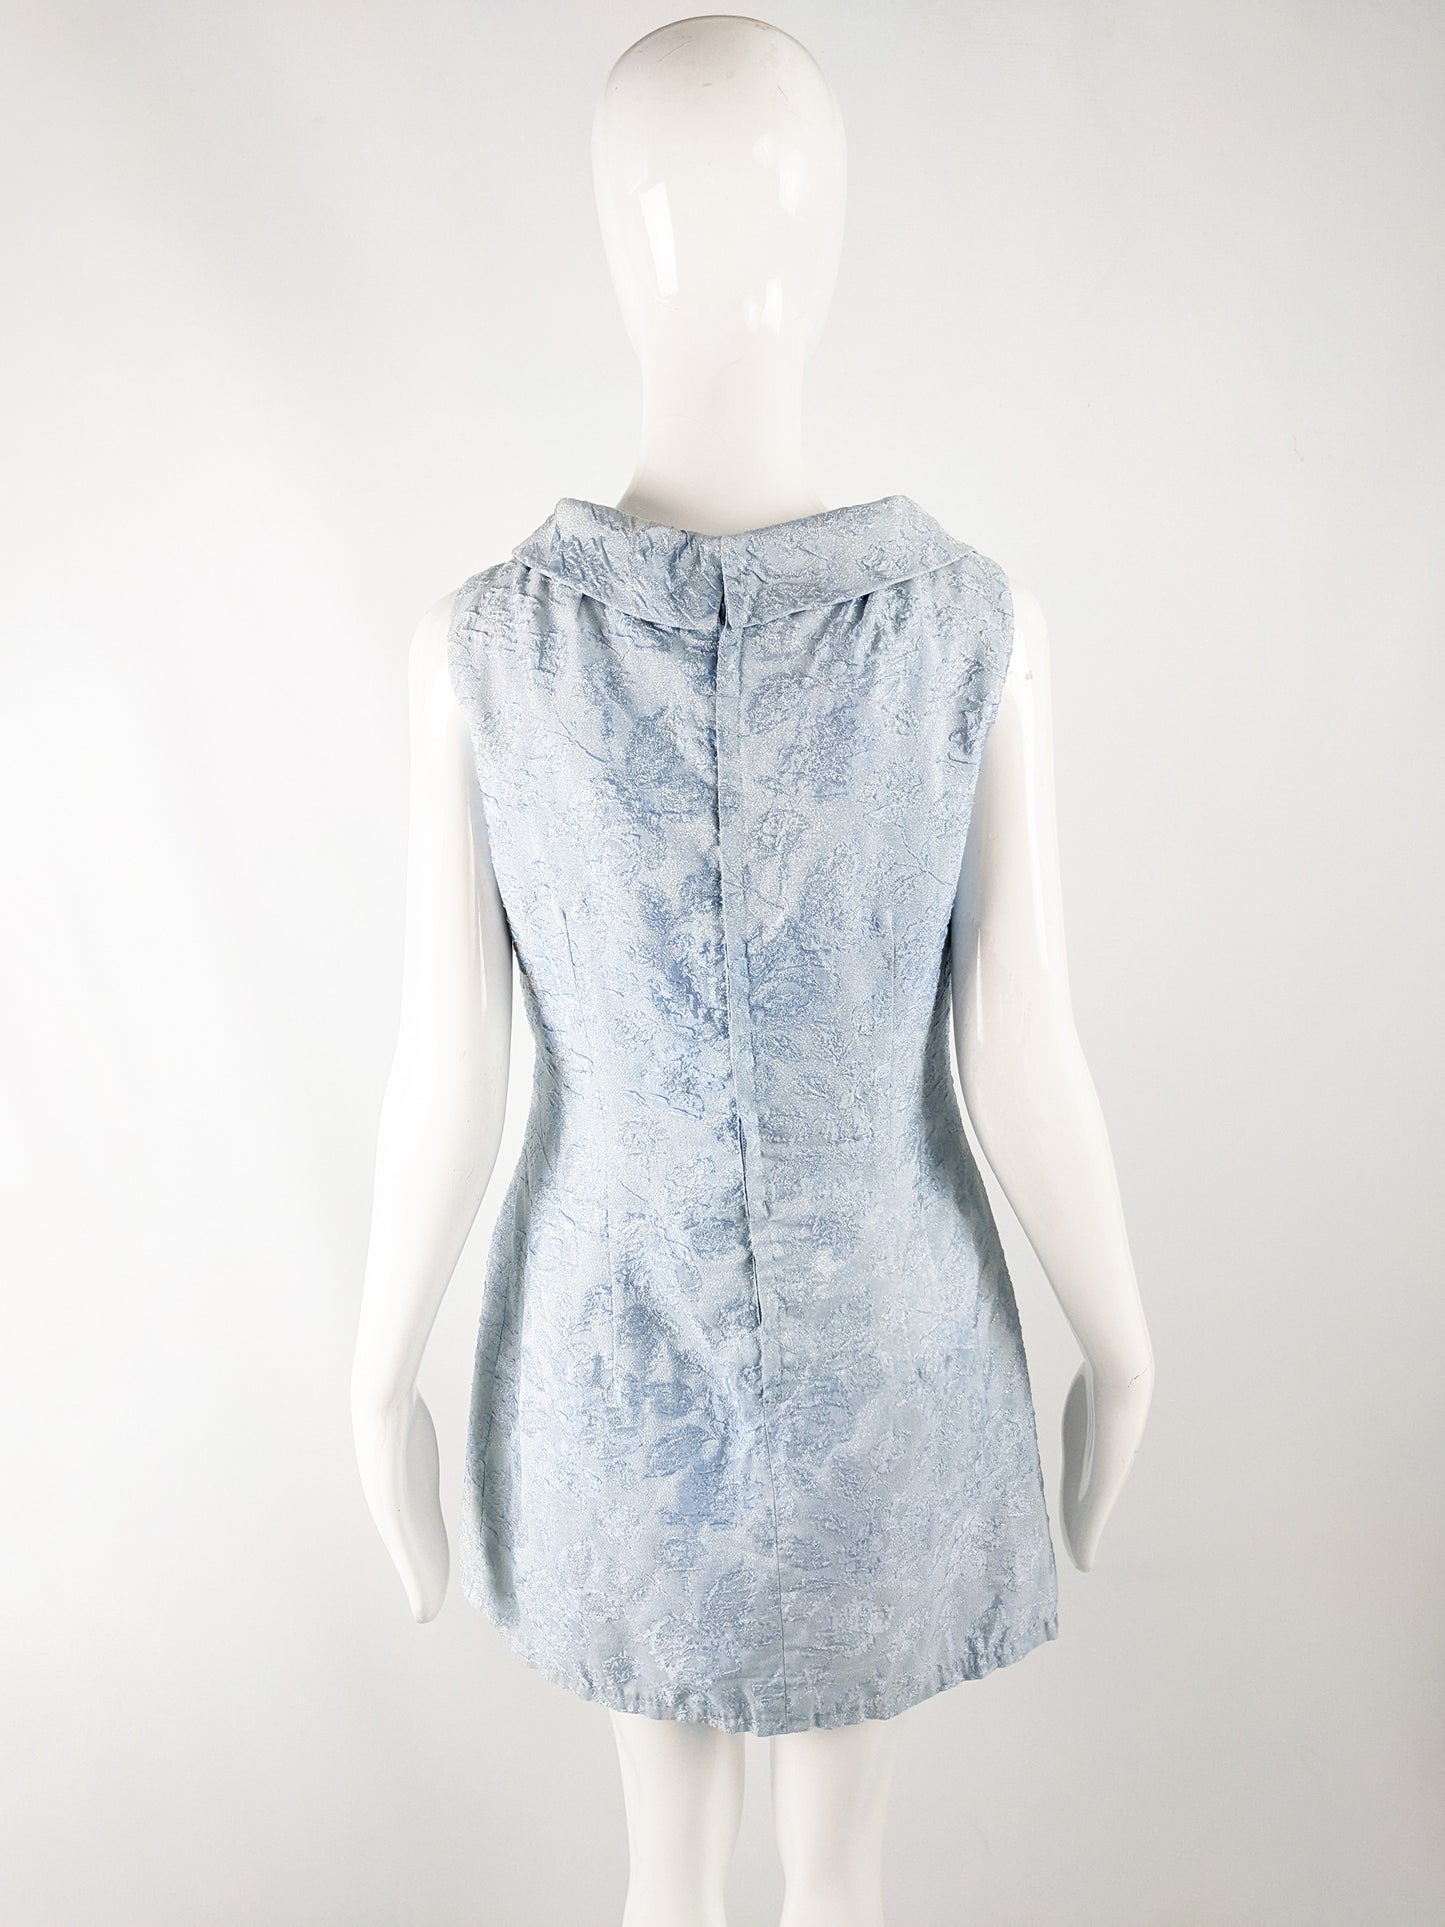 Vintage 1960s Pastel Blue Metallic Brocade Cocktail Dress